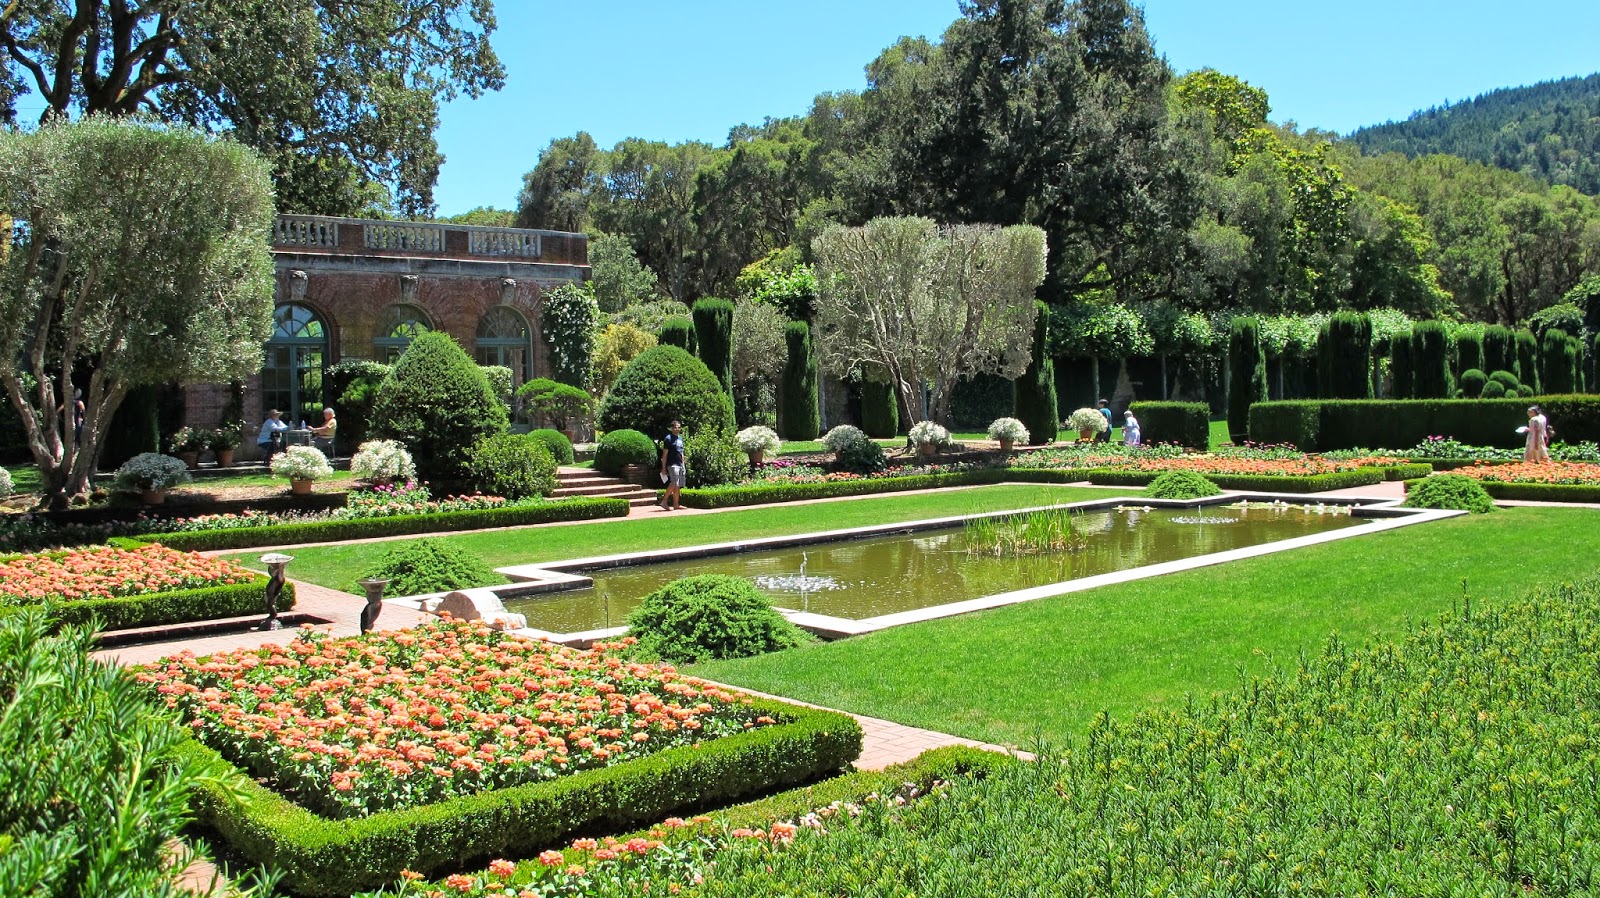 an alameda garden: going to filoli? get discounted tickets through